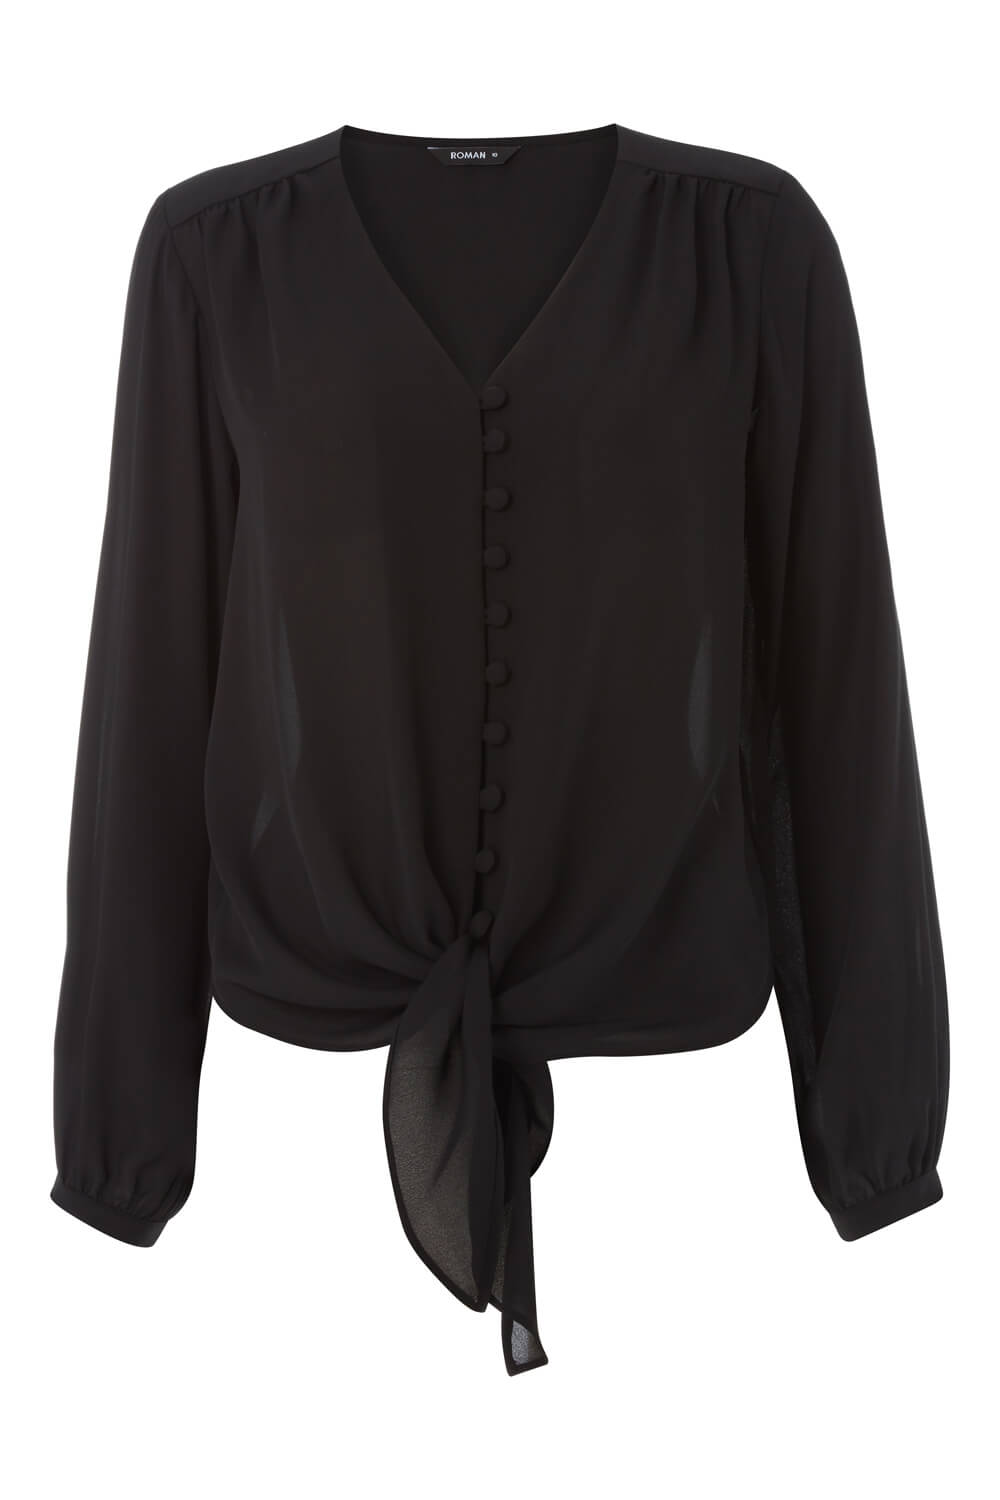 Button Tie Front Blouse in Black - Roman Originals UK